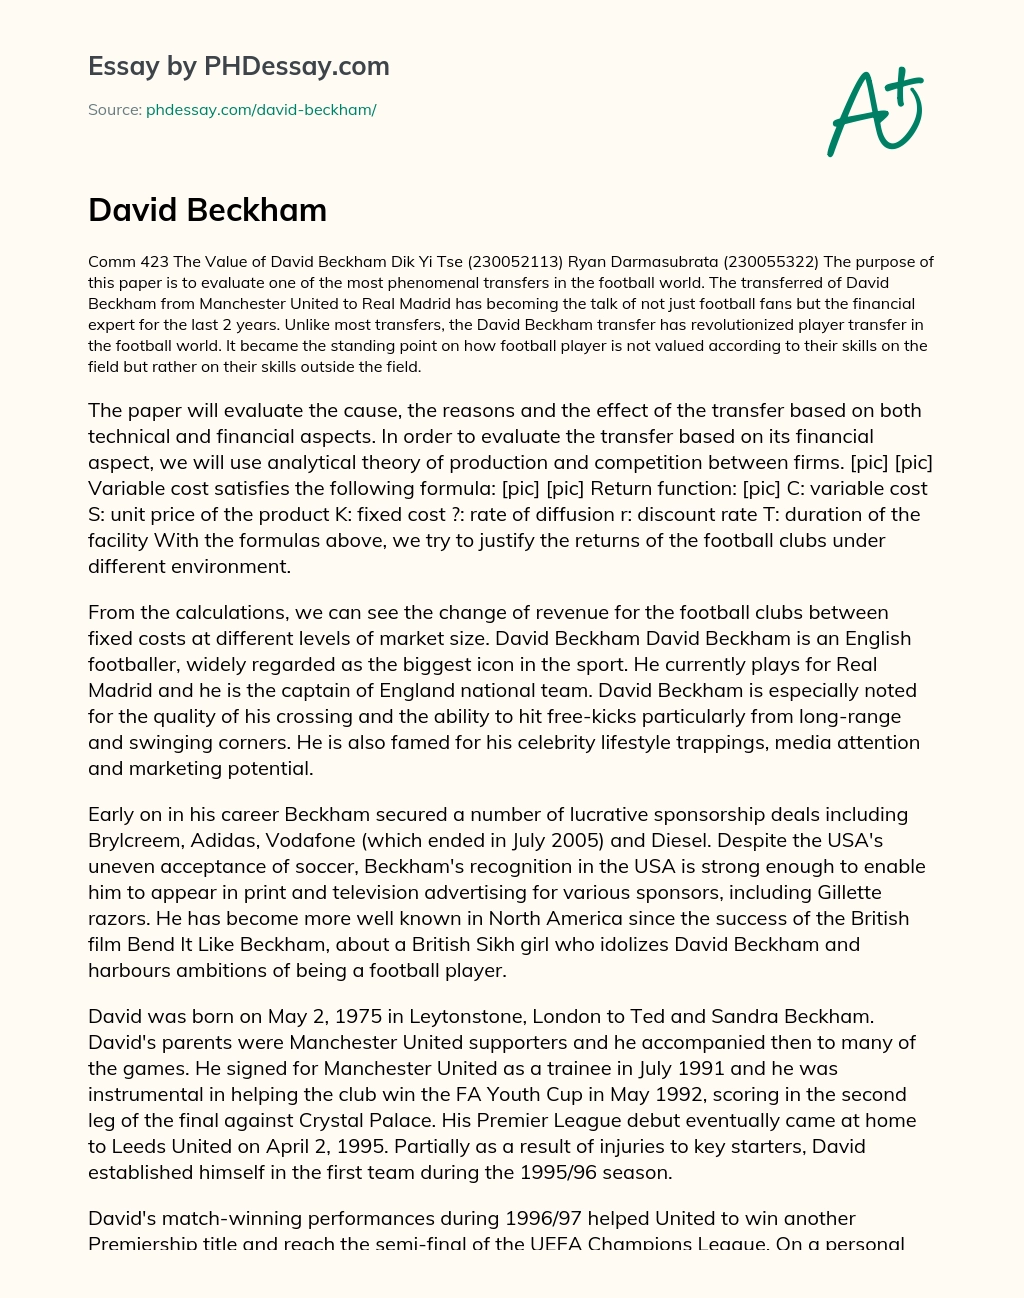 David Beckham essay